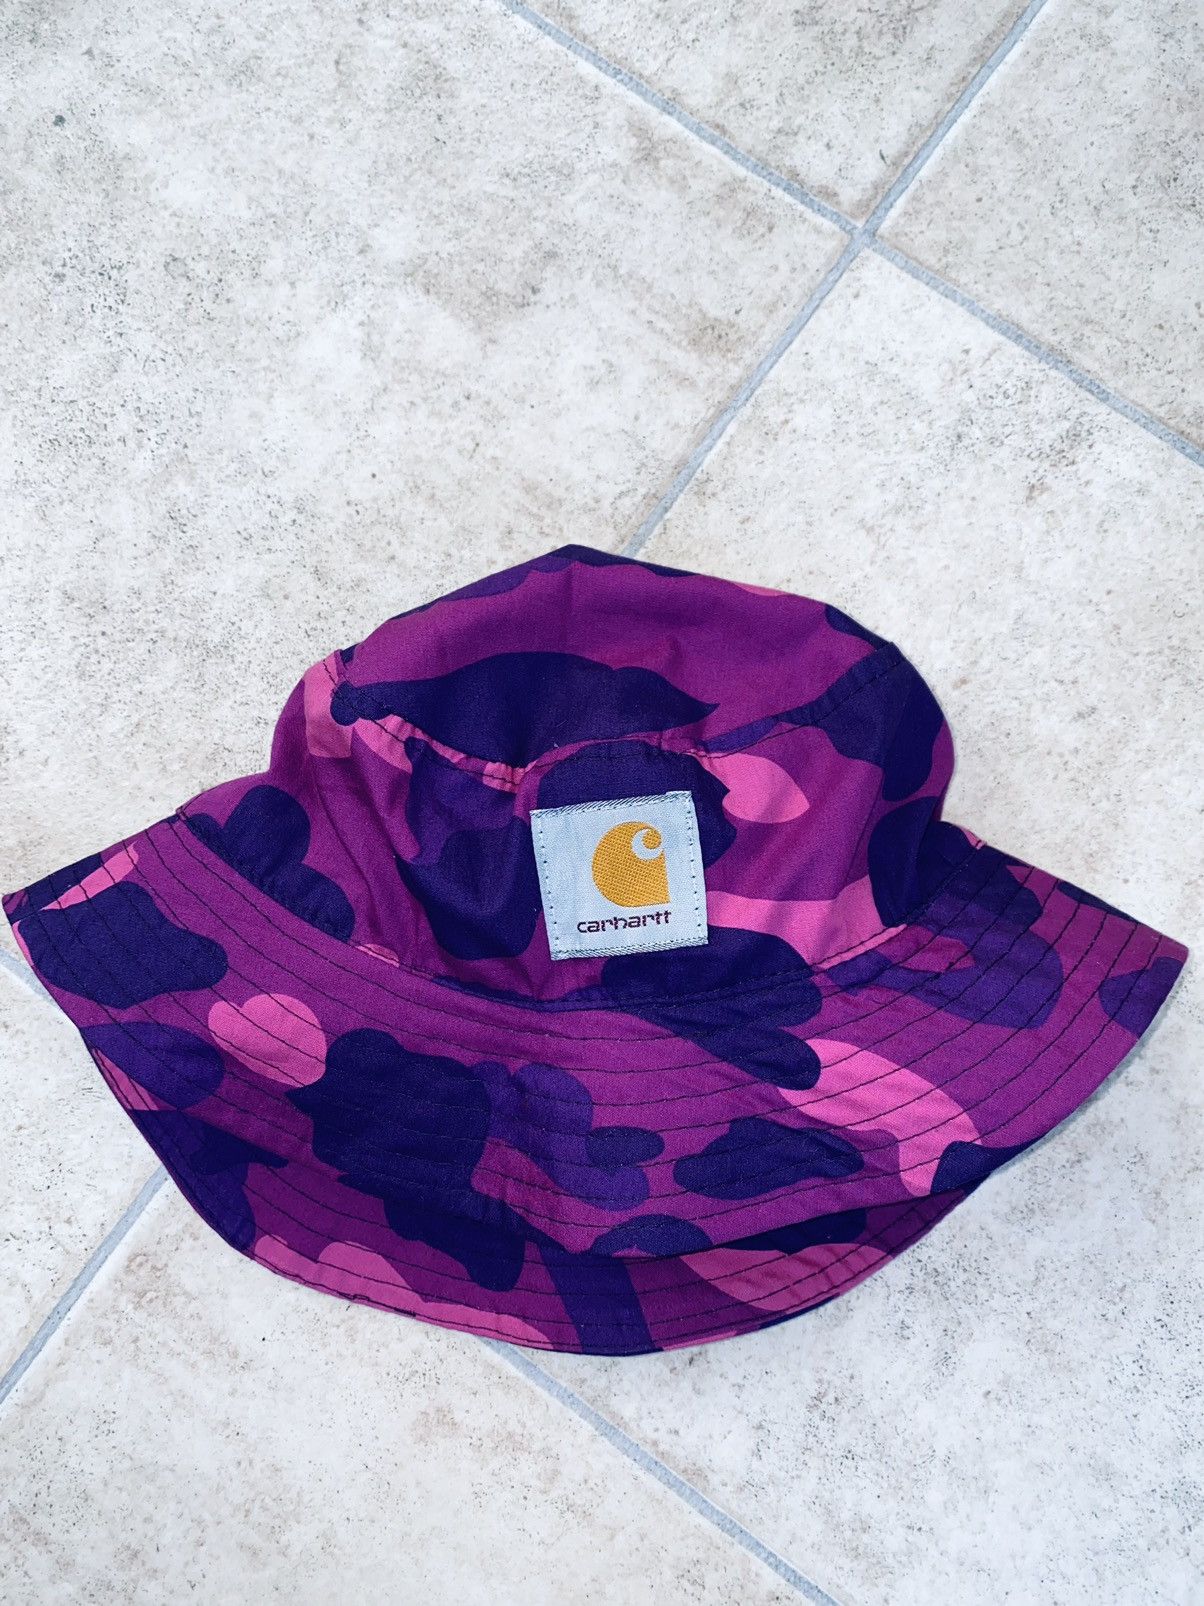 Carhartt Bape rework Camo Bucket Hat L Cav Empt Supreme Nigo Stussy Size ONE SIZE - 4 Thumbnail